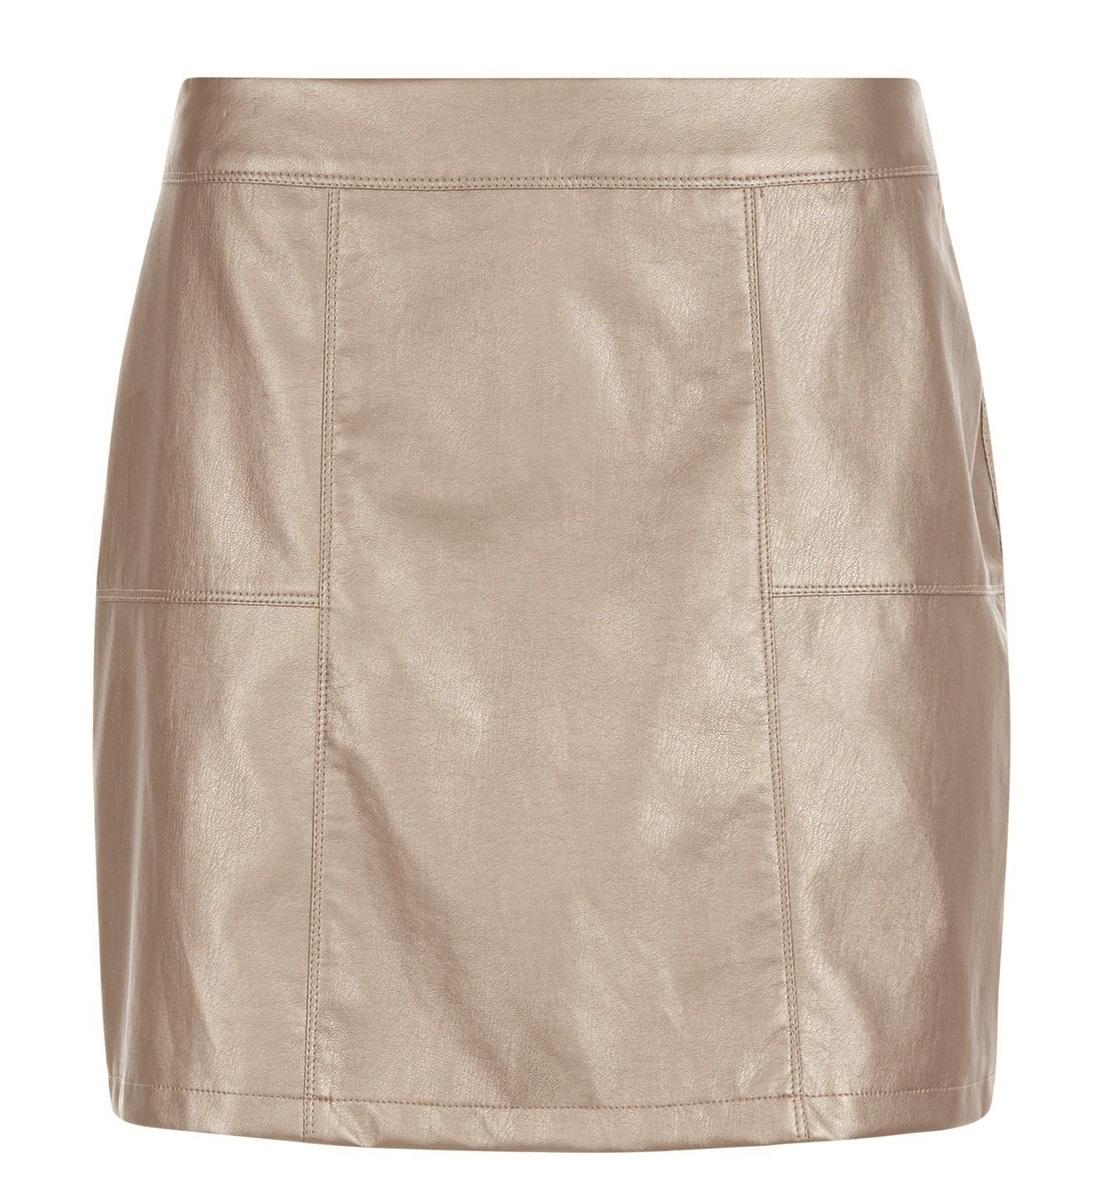 New Look, Metallic Mini Skirt, £19.99